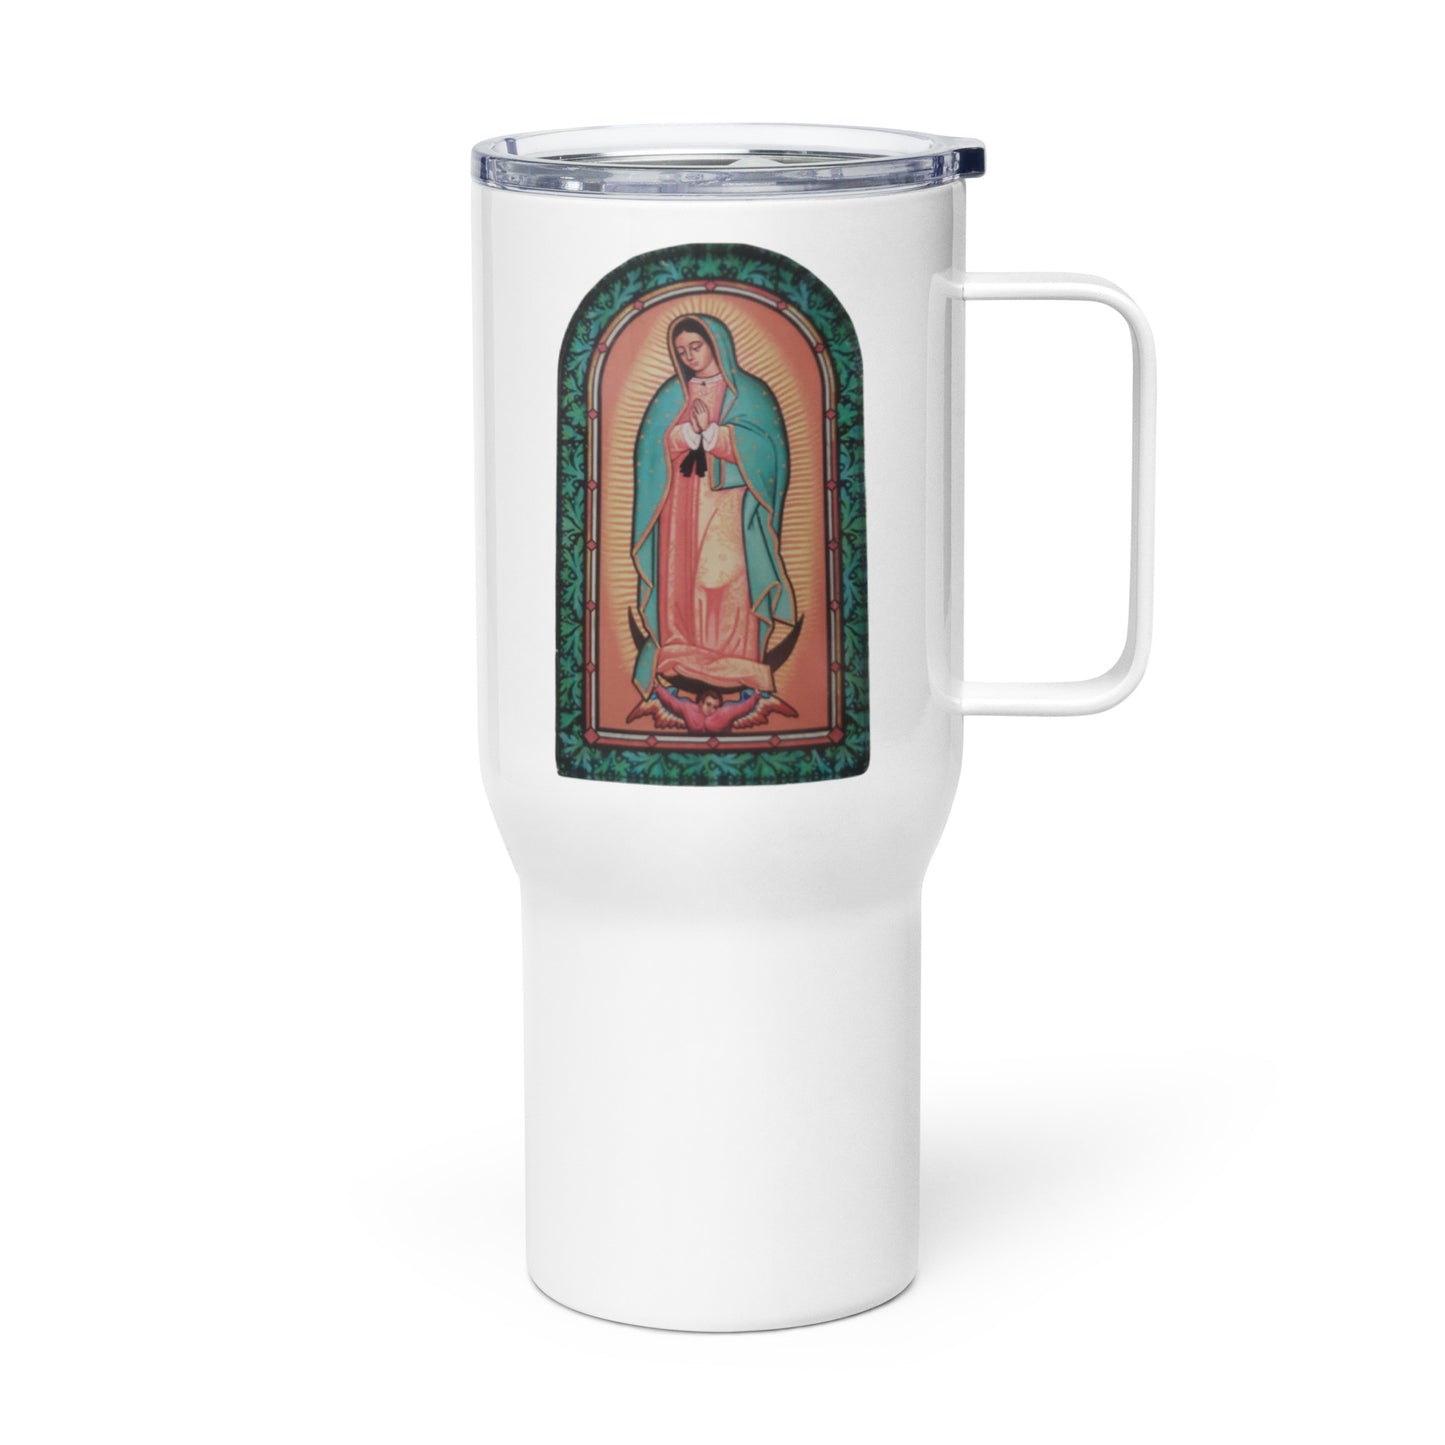 Our Lady of Guadalupe Travel Mug